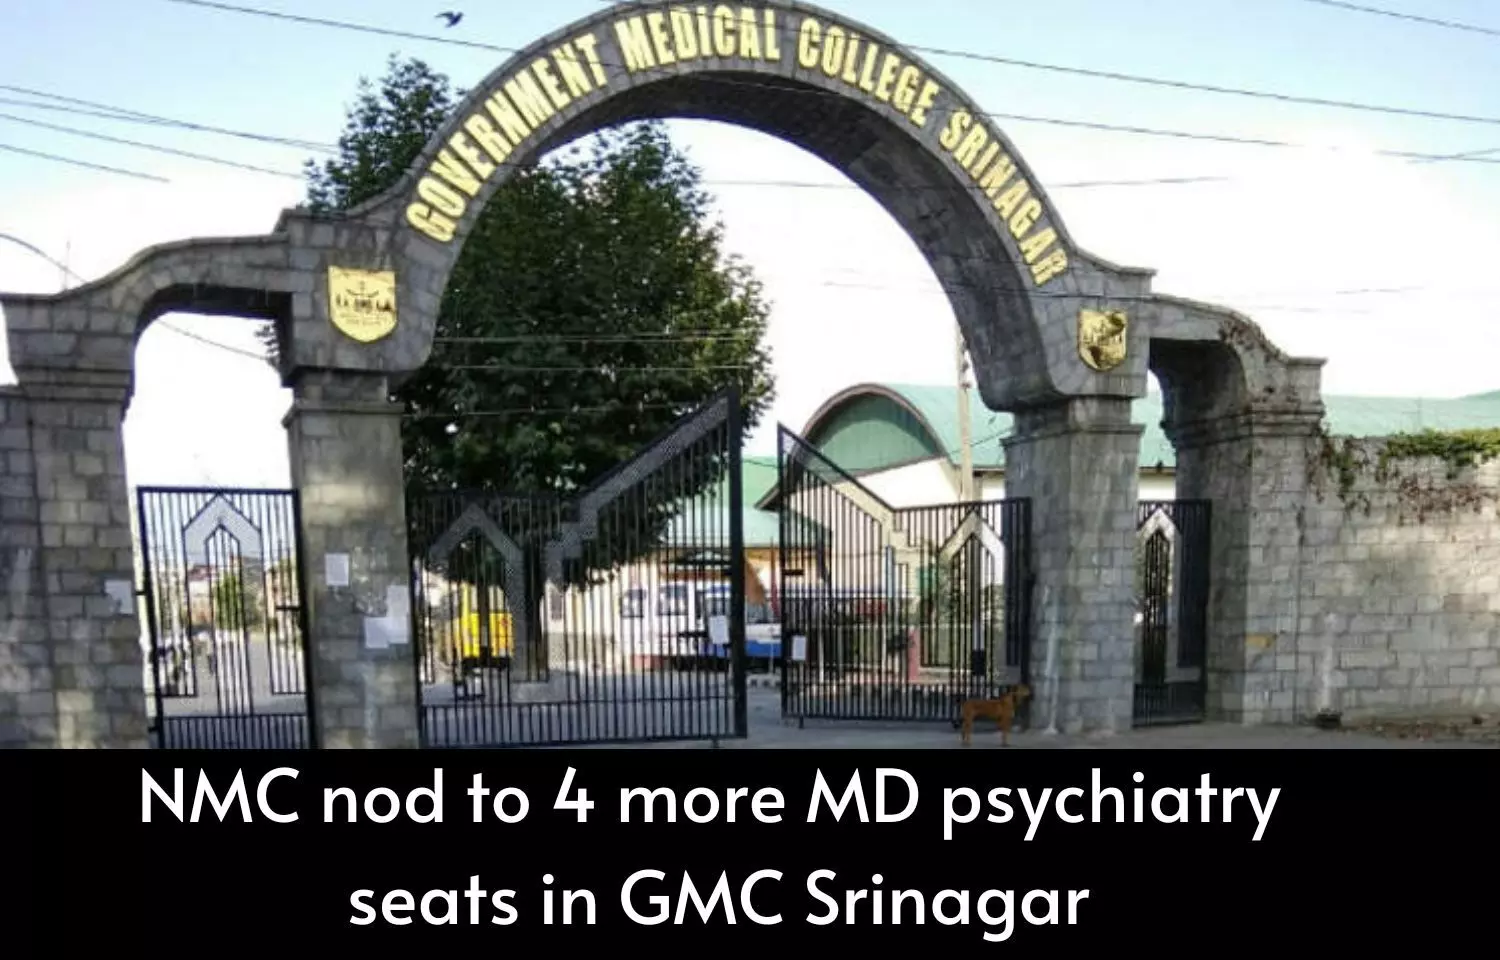 GMC Srinagar gets NMC nod for 4 more MD psychiatry seats